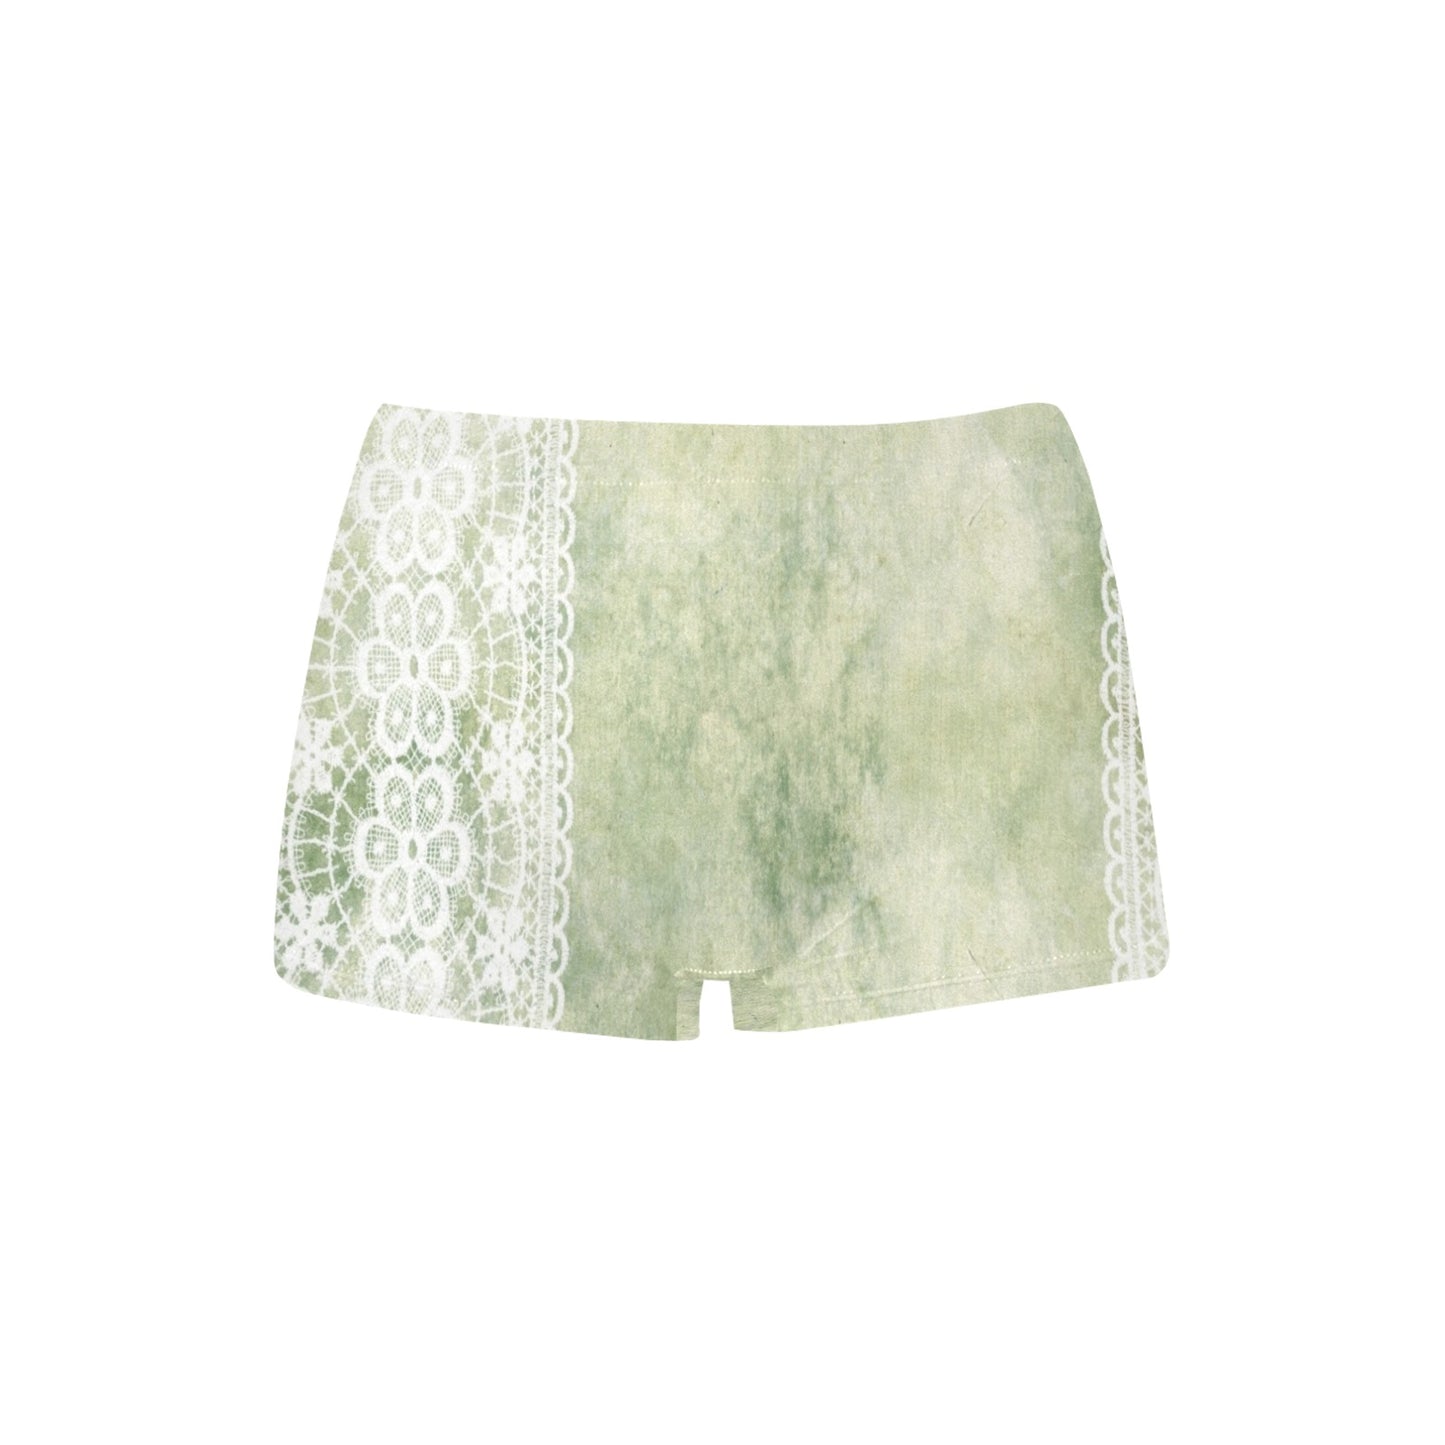 Printed Lace Boyshorts, daisy dukes, pum pum shorts, shortie shorts , design 42